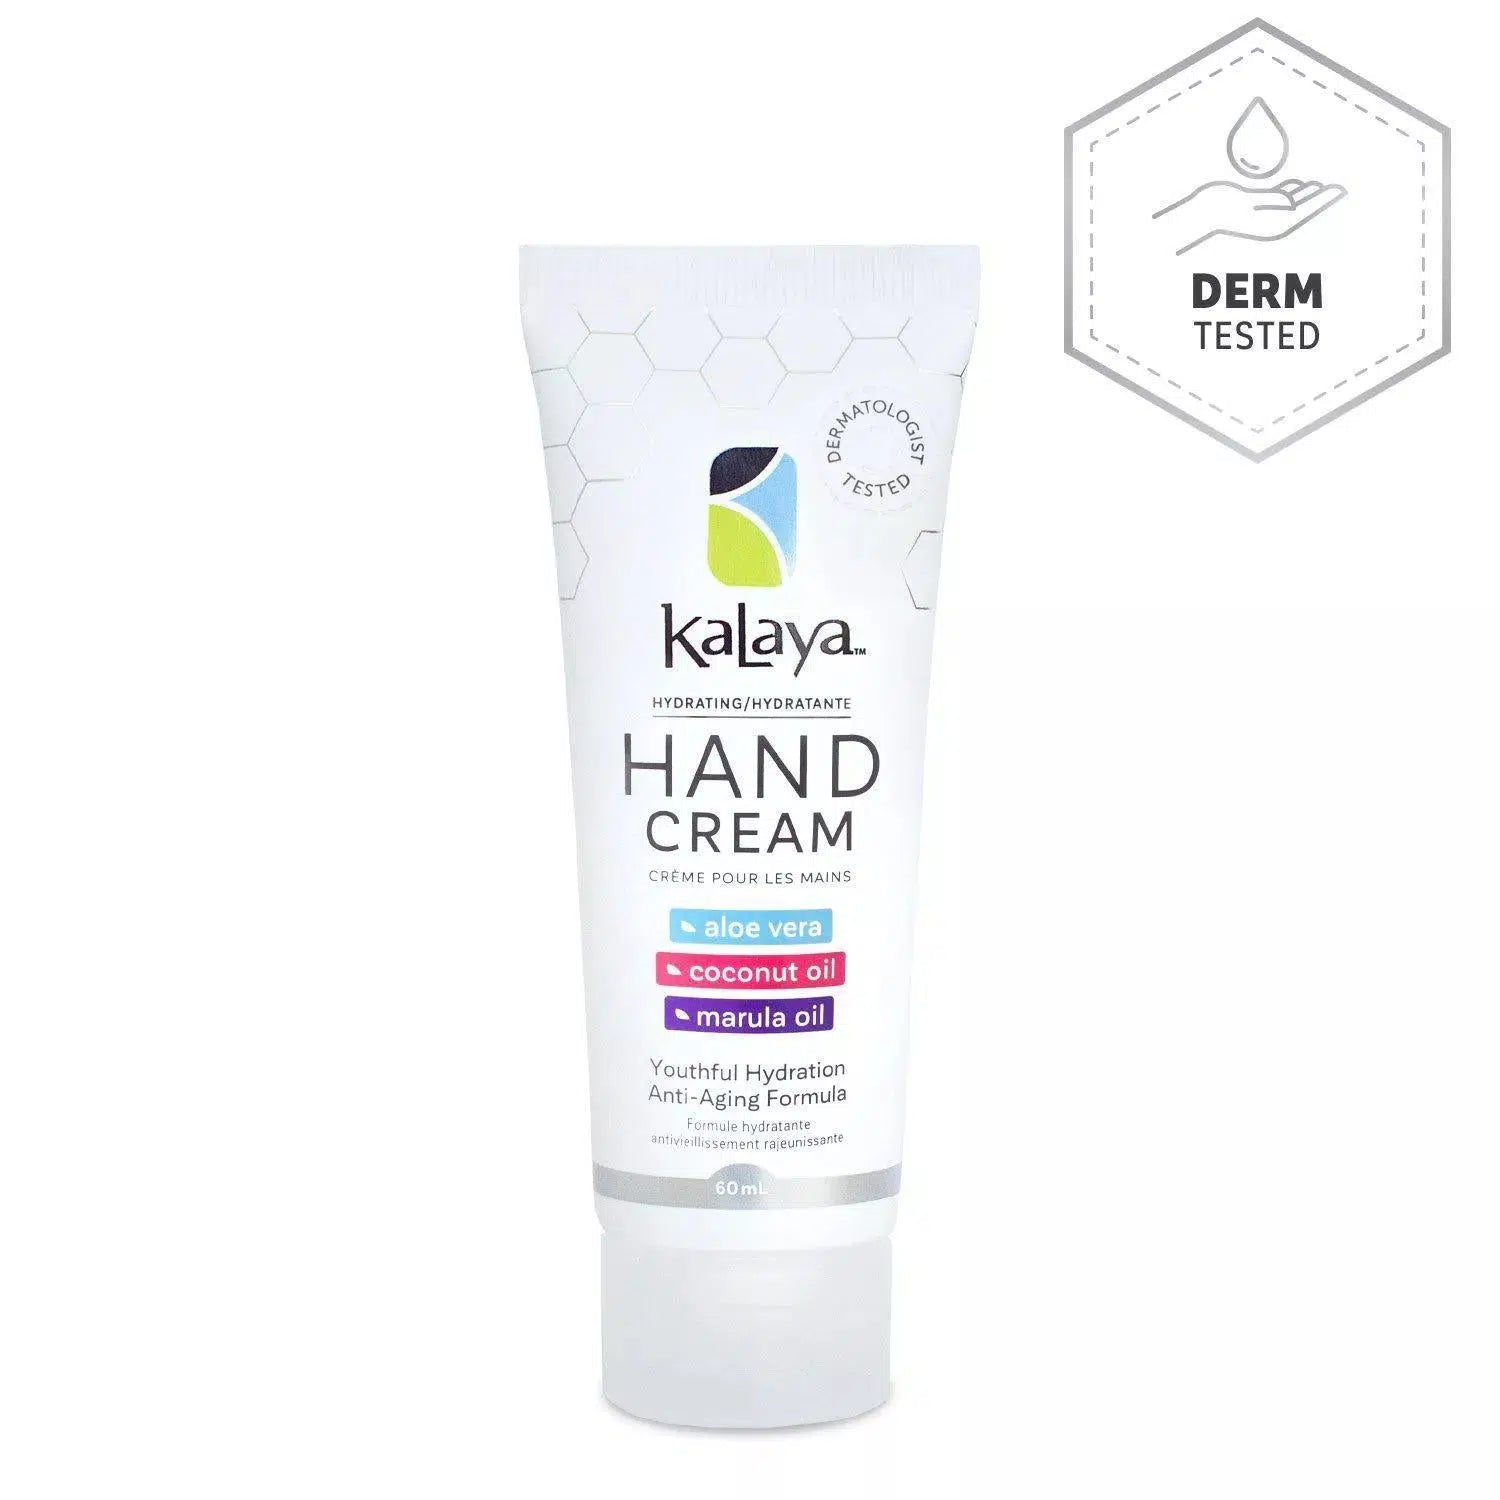 Kalaya Hand Cream 60mL Tube Front - Dermatologist Tested